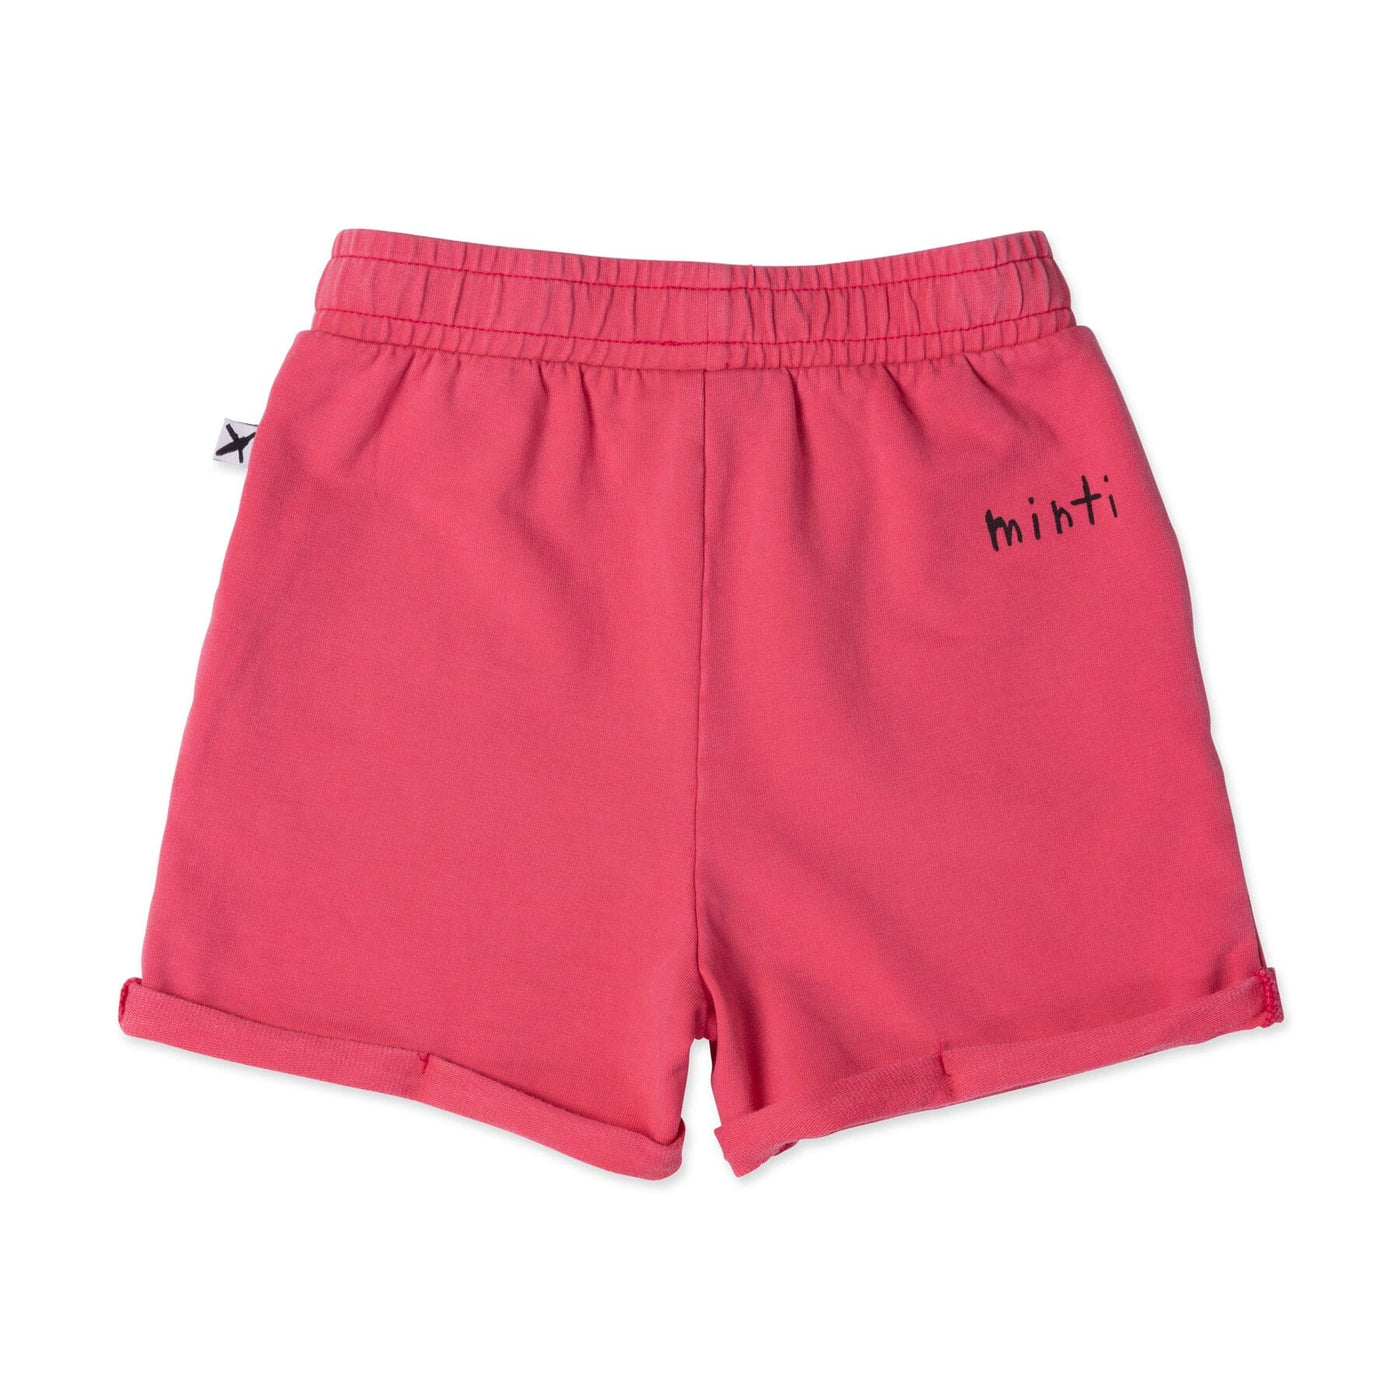 PREORDER Minti Blasted Track Short - Pink Wash Shorts Minti 